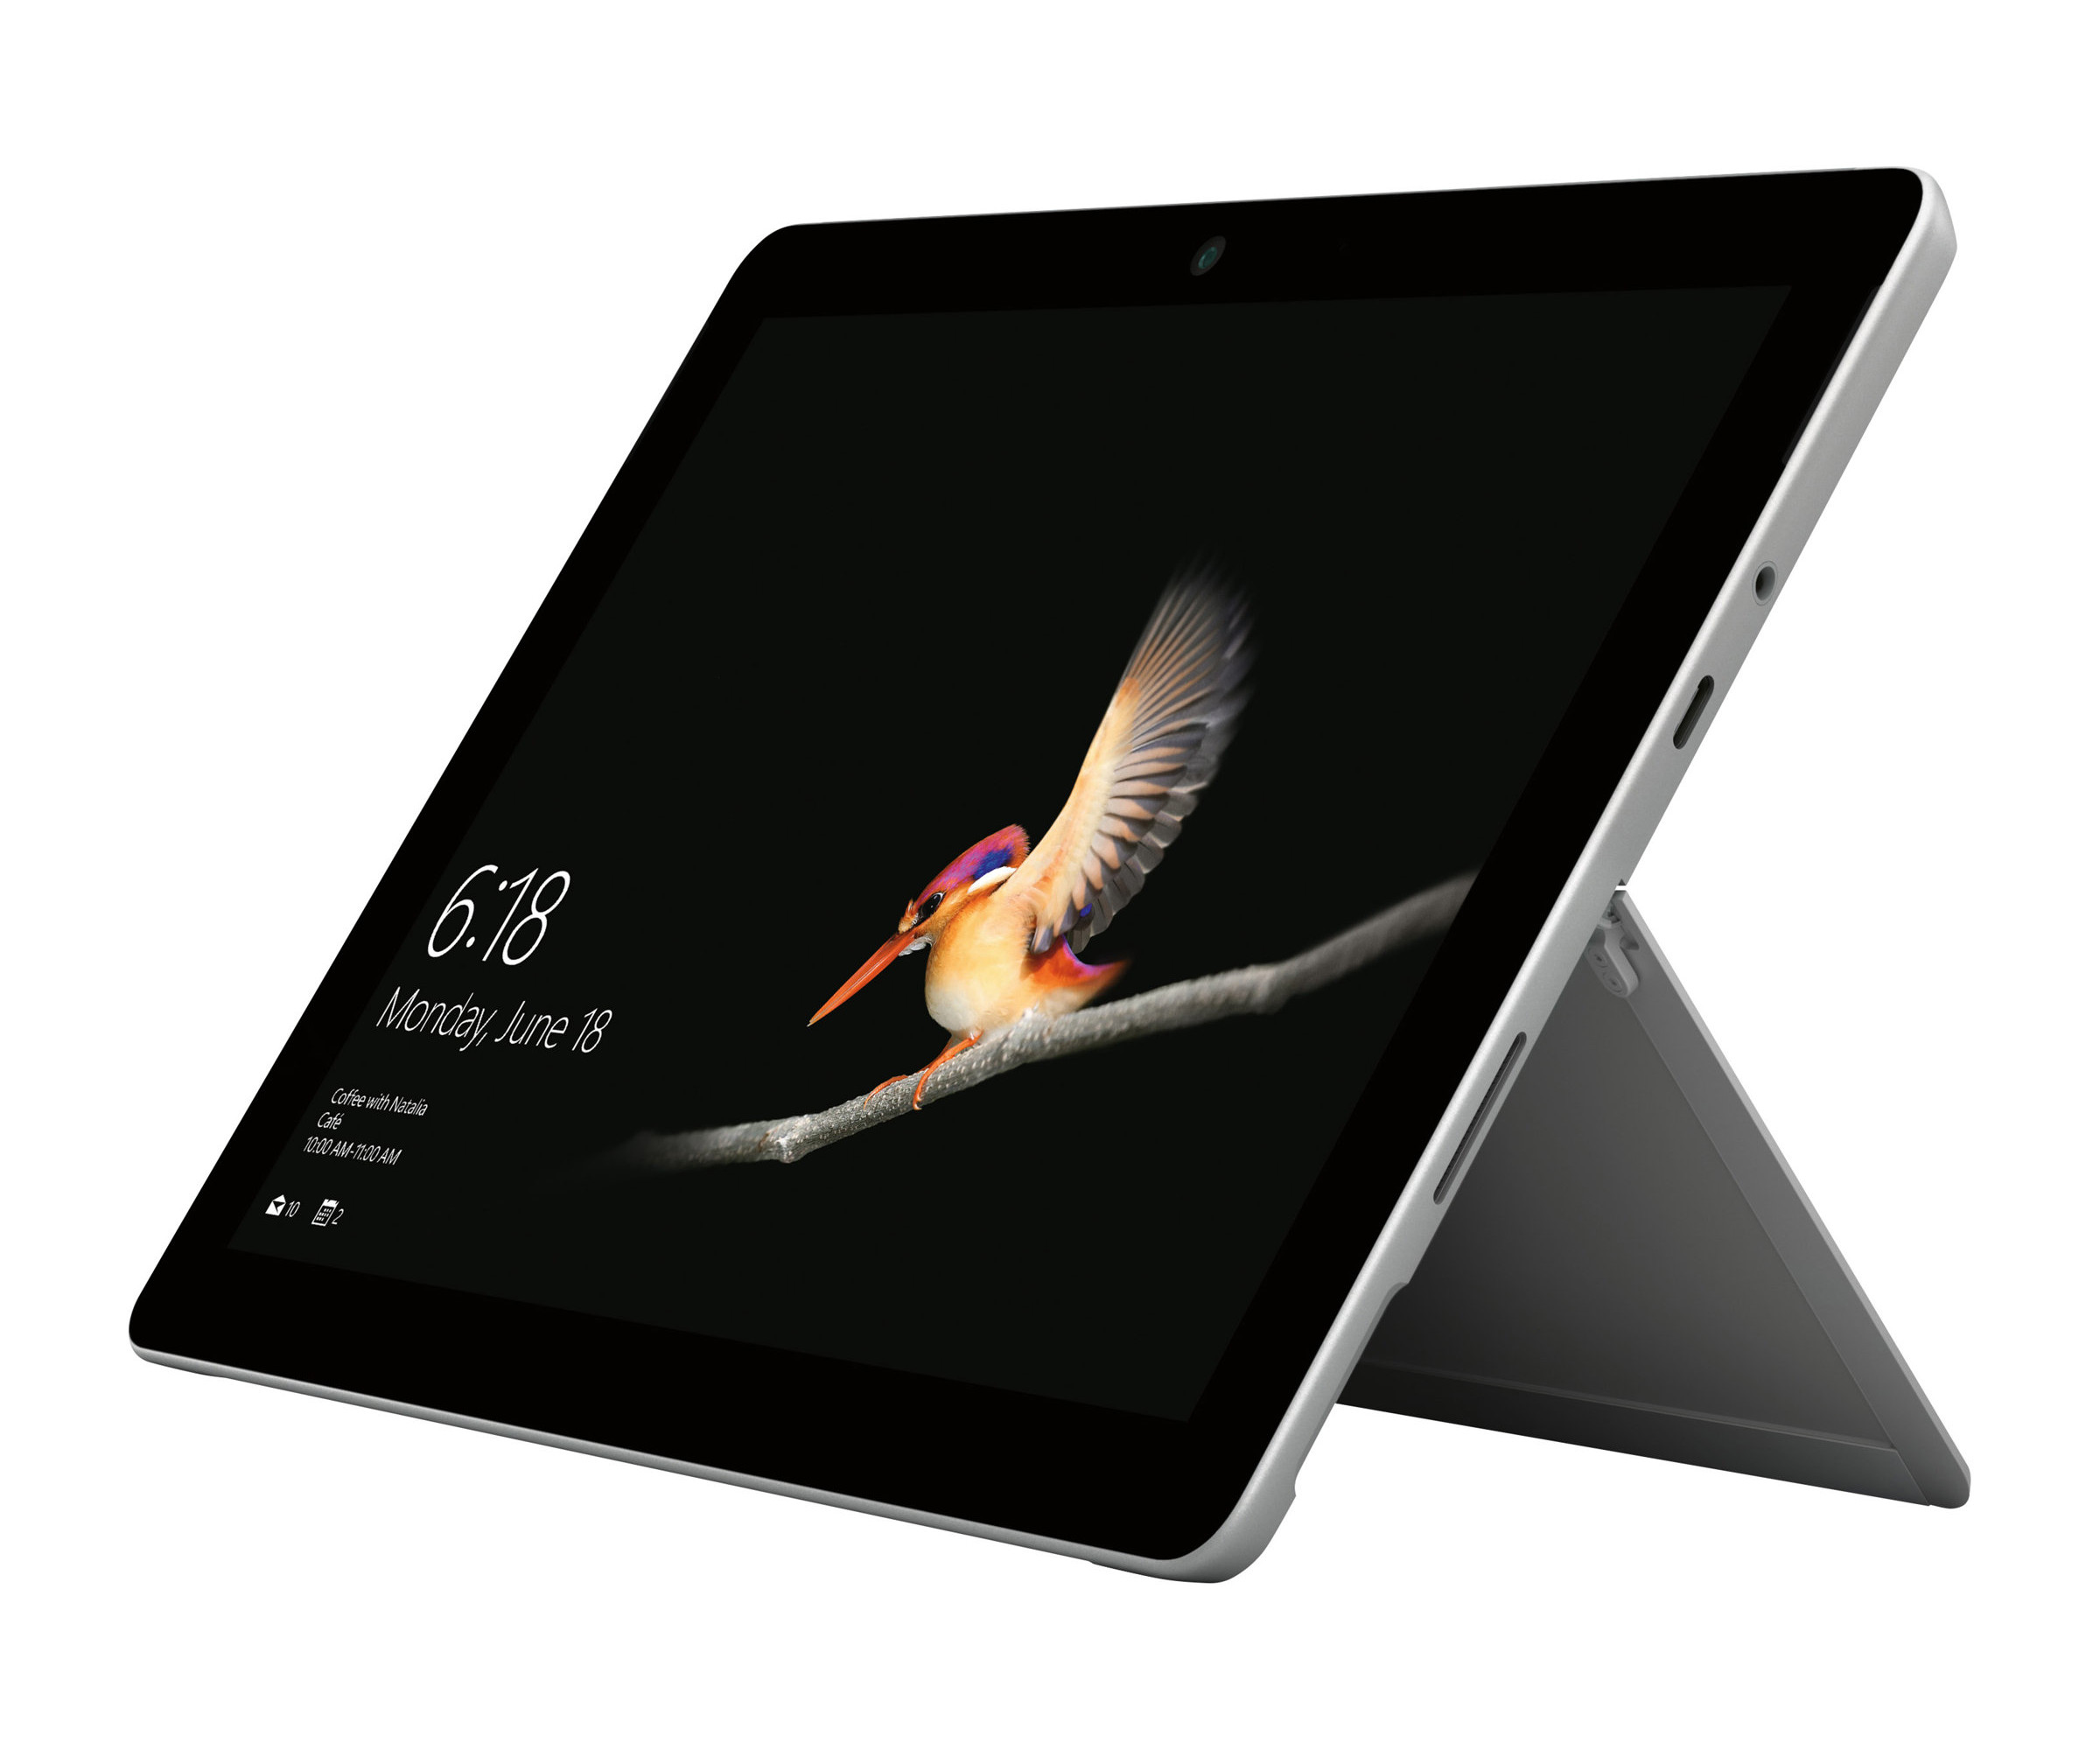 Microsoft Surface Go - Tablet - Pentium Gold 4415Y / 1.6 GHz - Win 10 Pro - 4 GB RAM - 64 GB eMMC - 25.4 cm (10